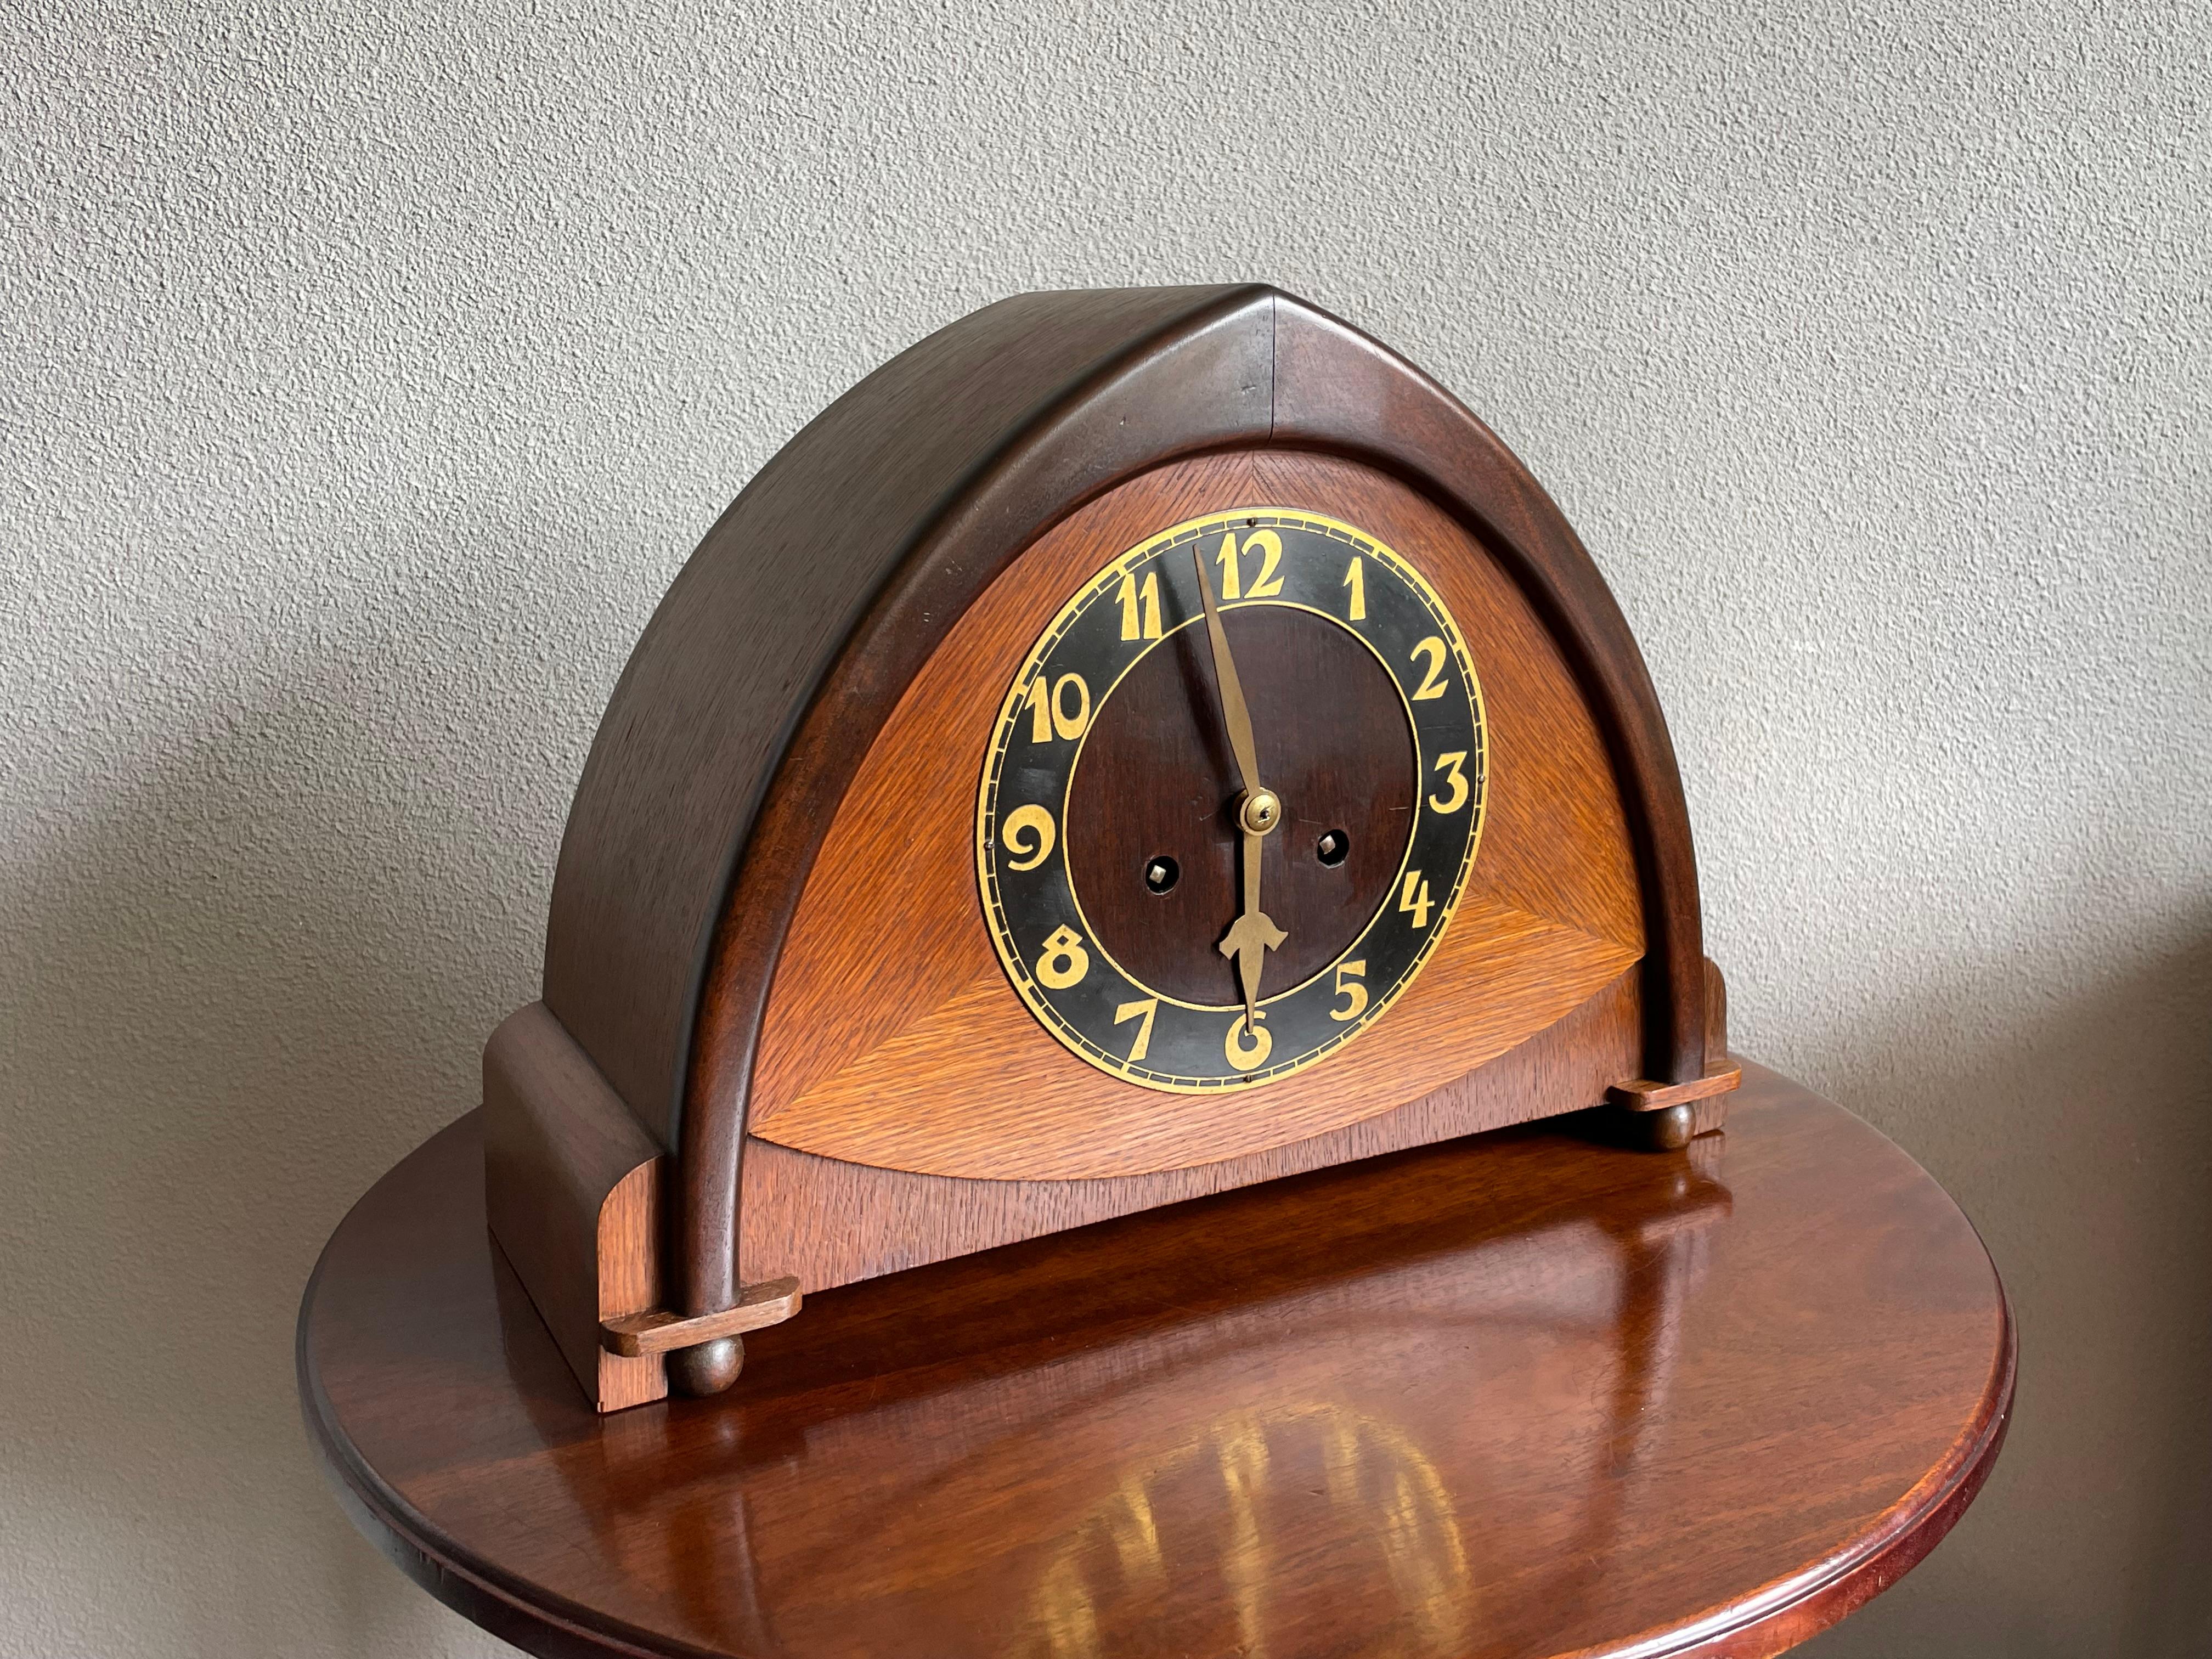 1915 on a clock